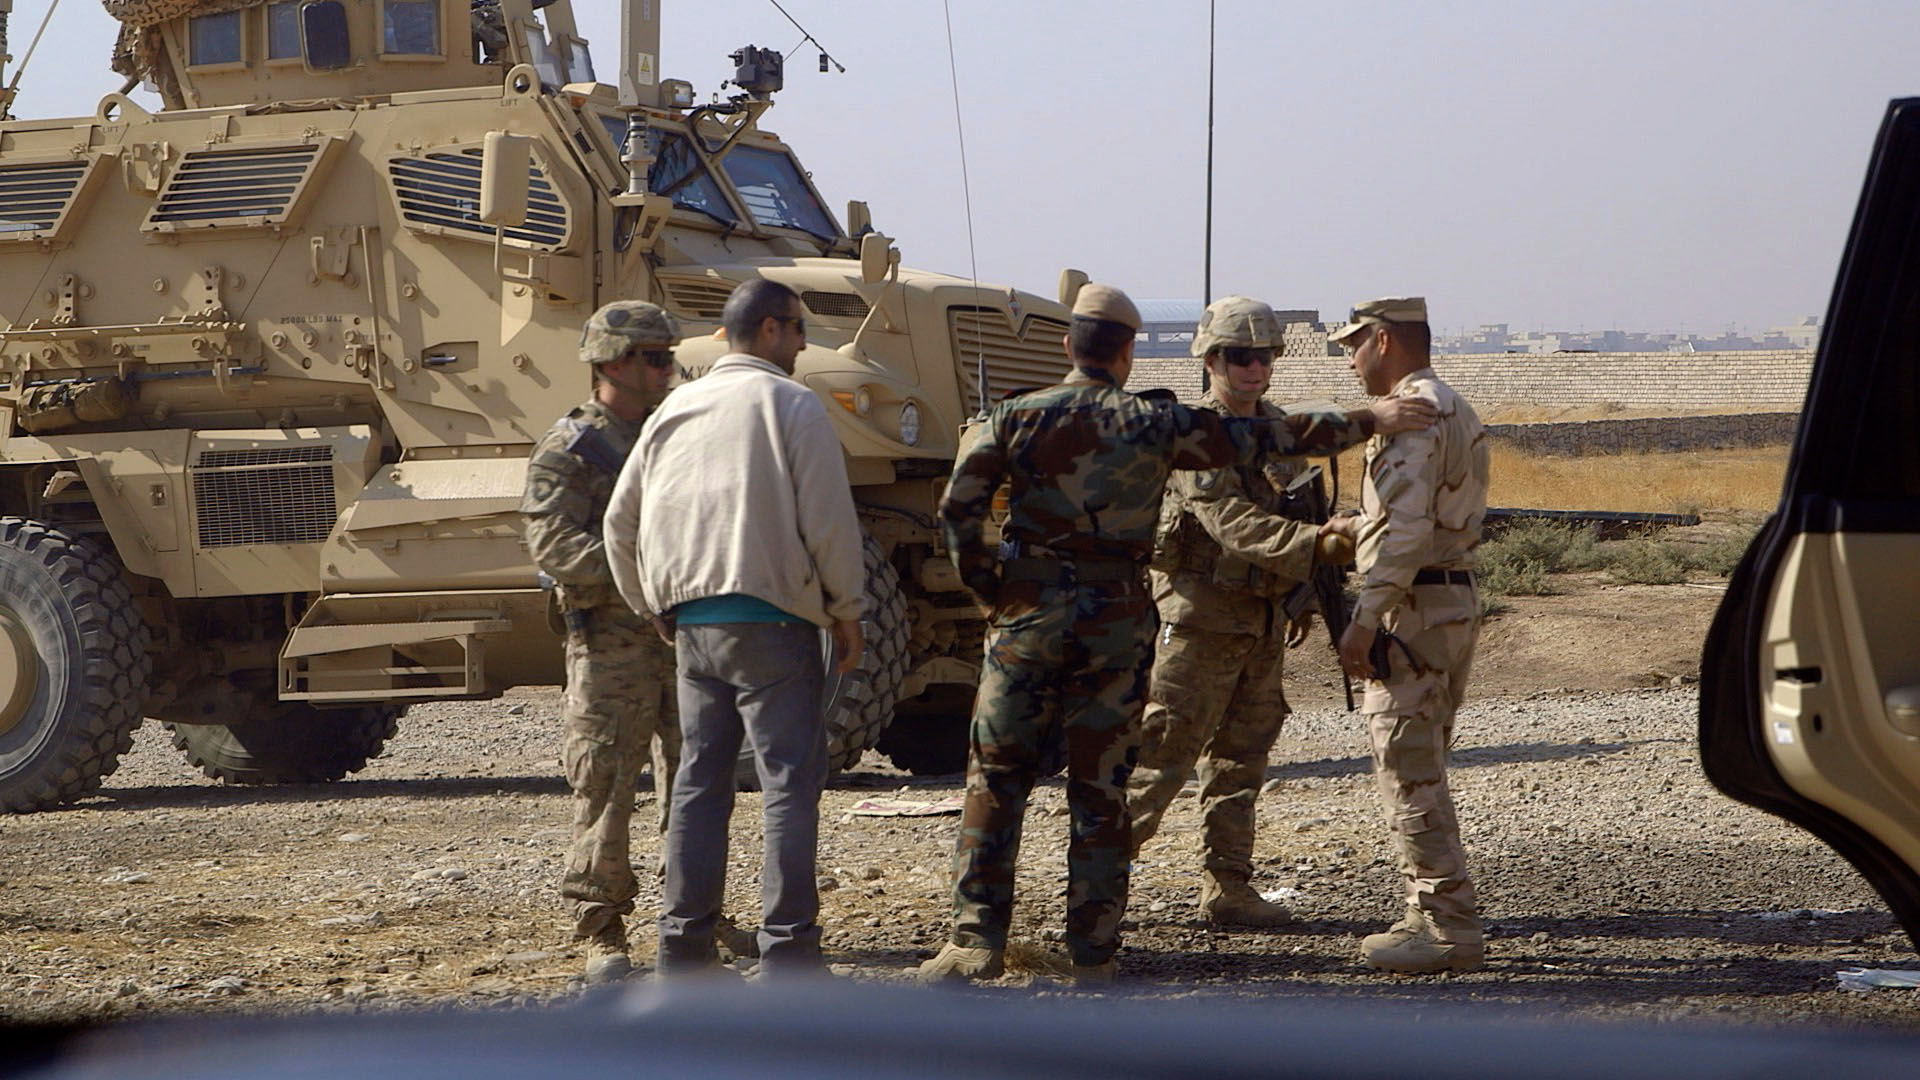 In Bartella, a Peshmerga general meets the international coalition’s U.S. advisors.